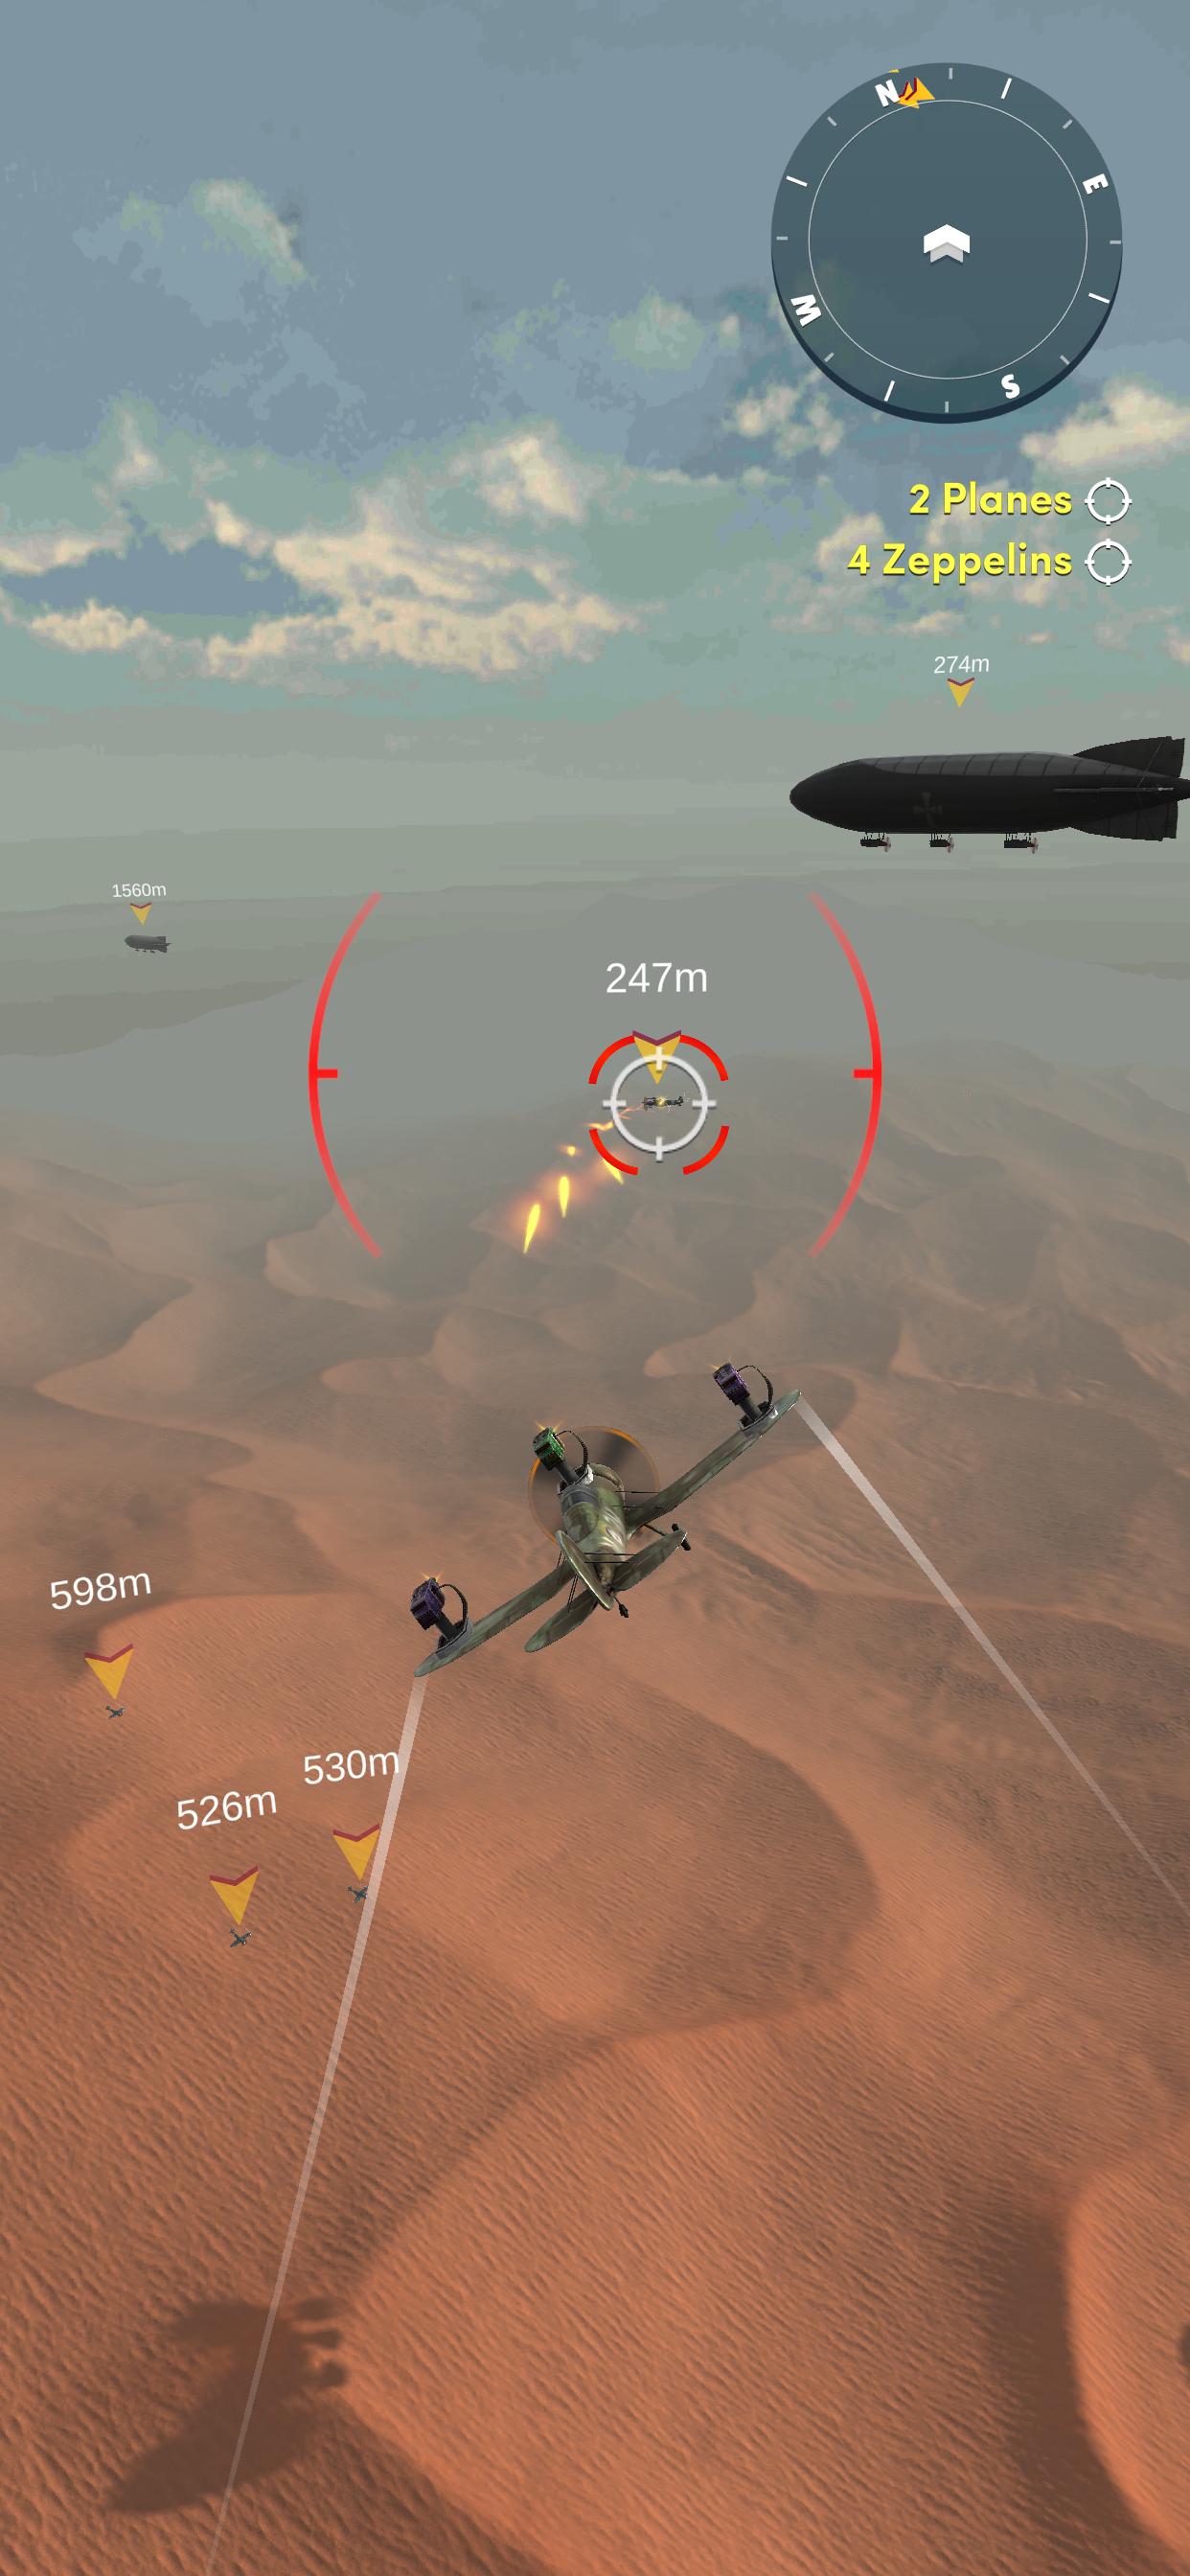 shoot down planes battlefield 5